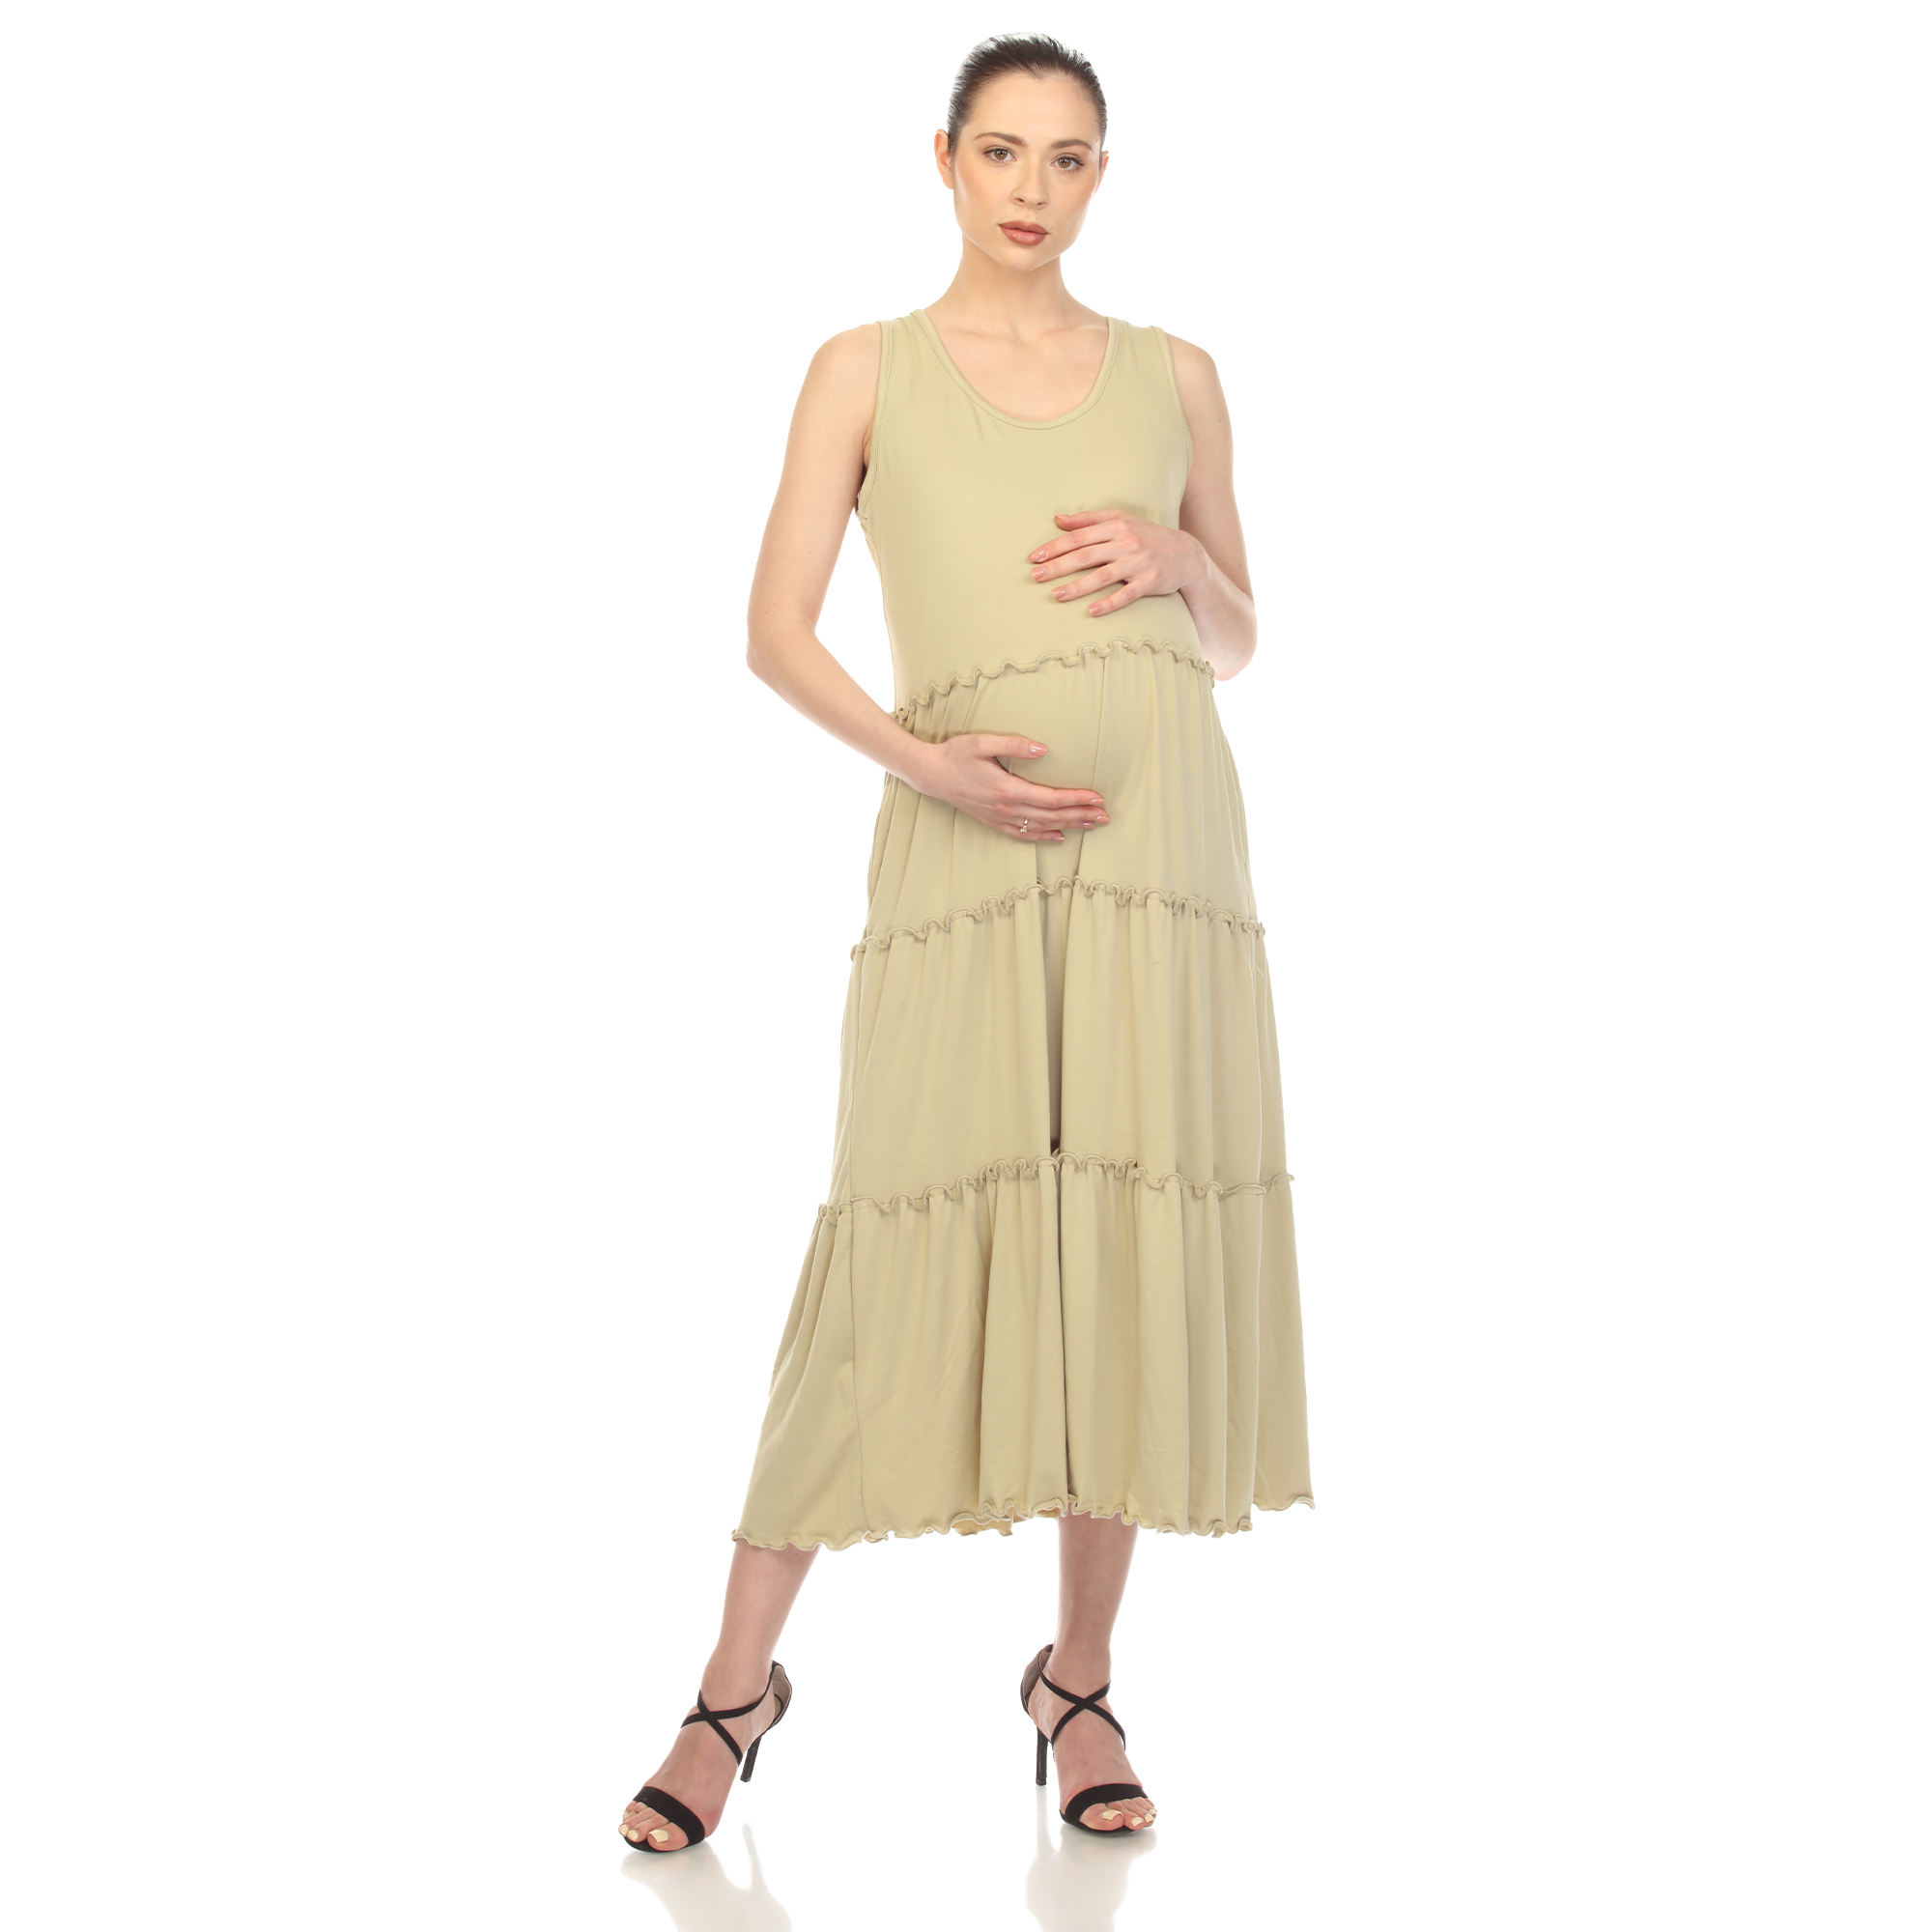 White Mark Women's Maternity Scoop Neck Tiered Midi Dress - Pale Olive, 2X